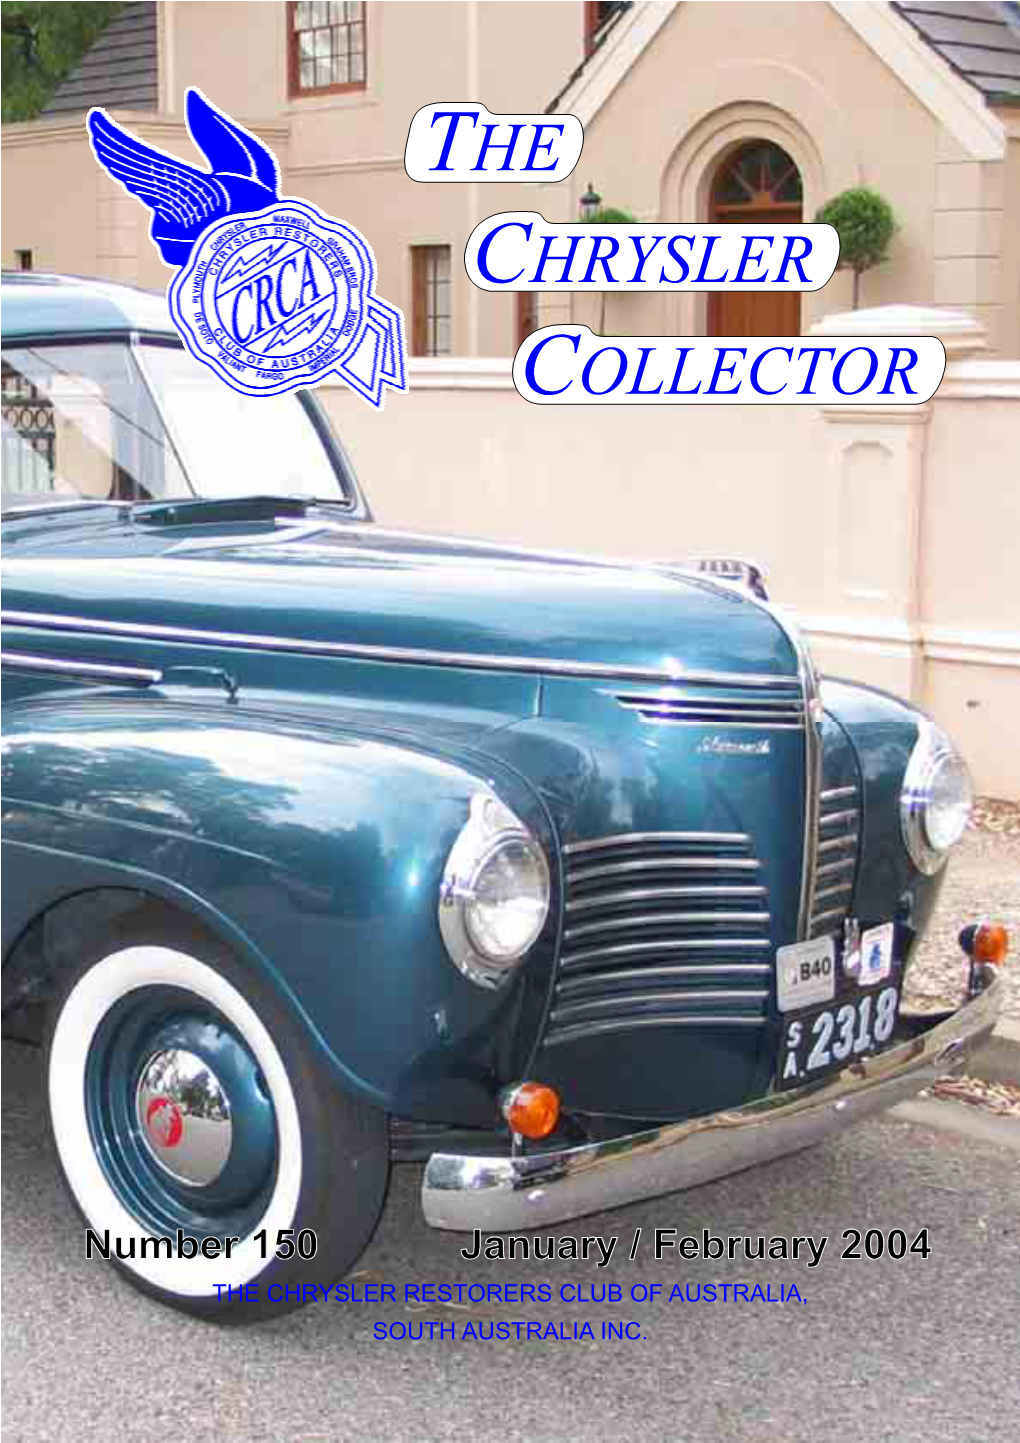 The Chrysler Restorers Club of Australia, South Australia Inc